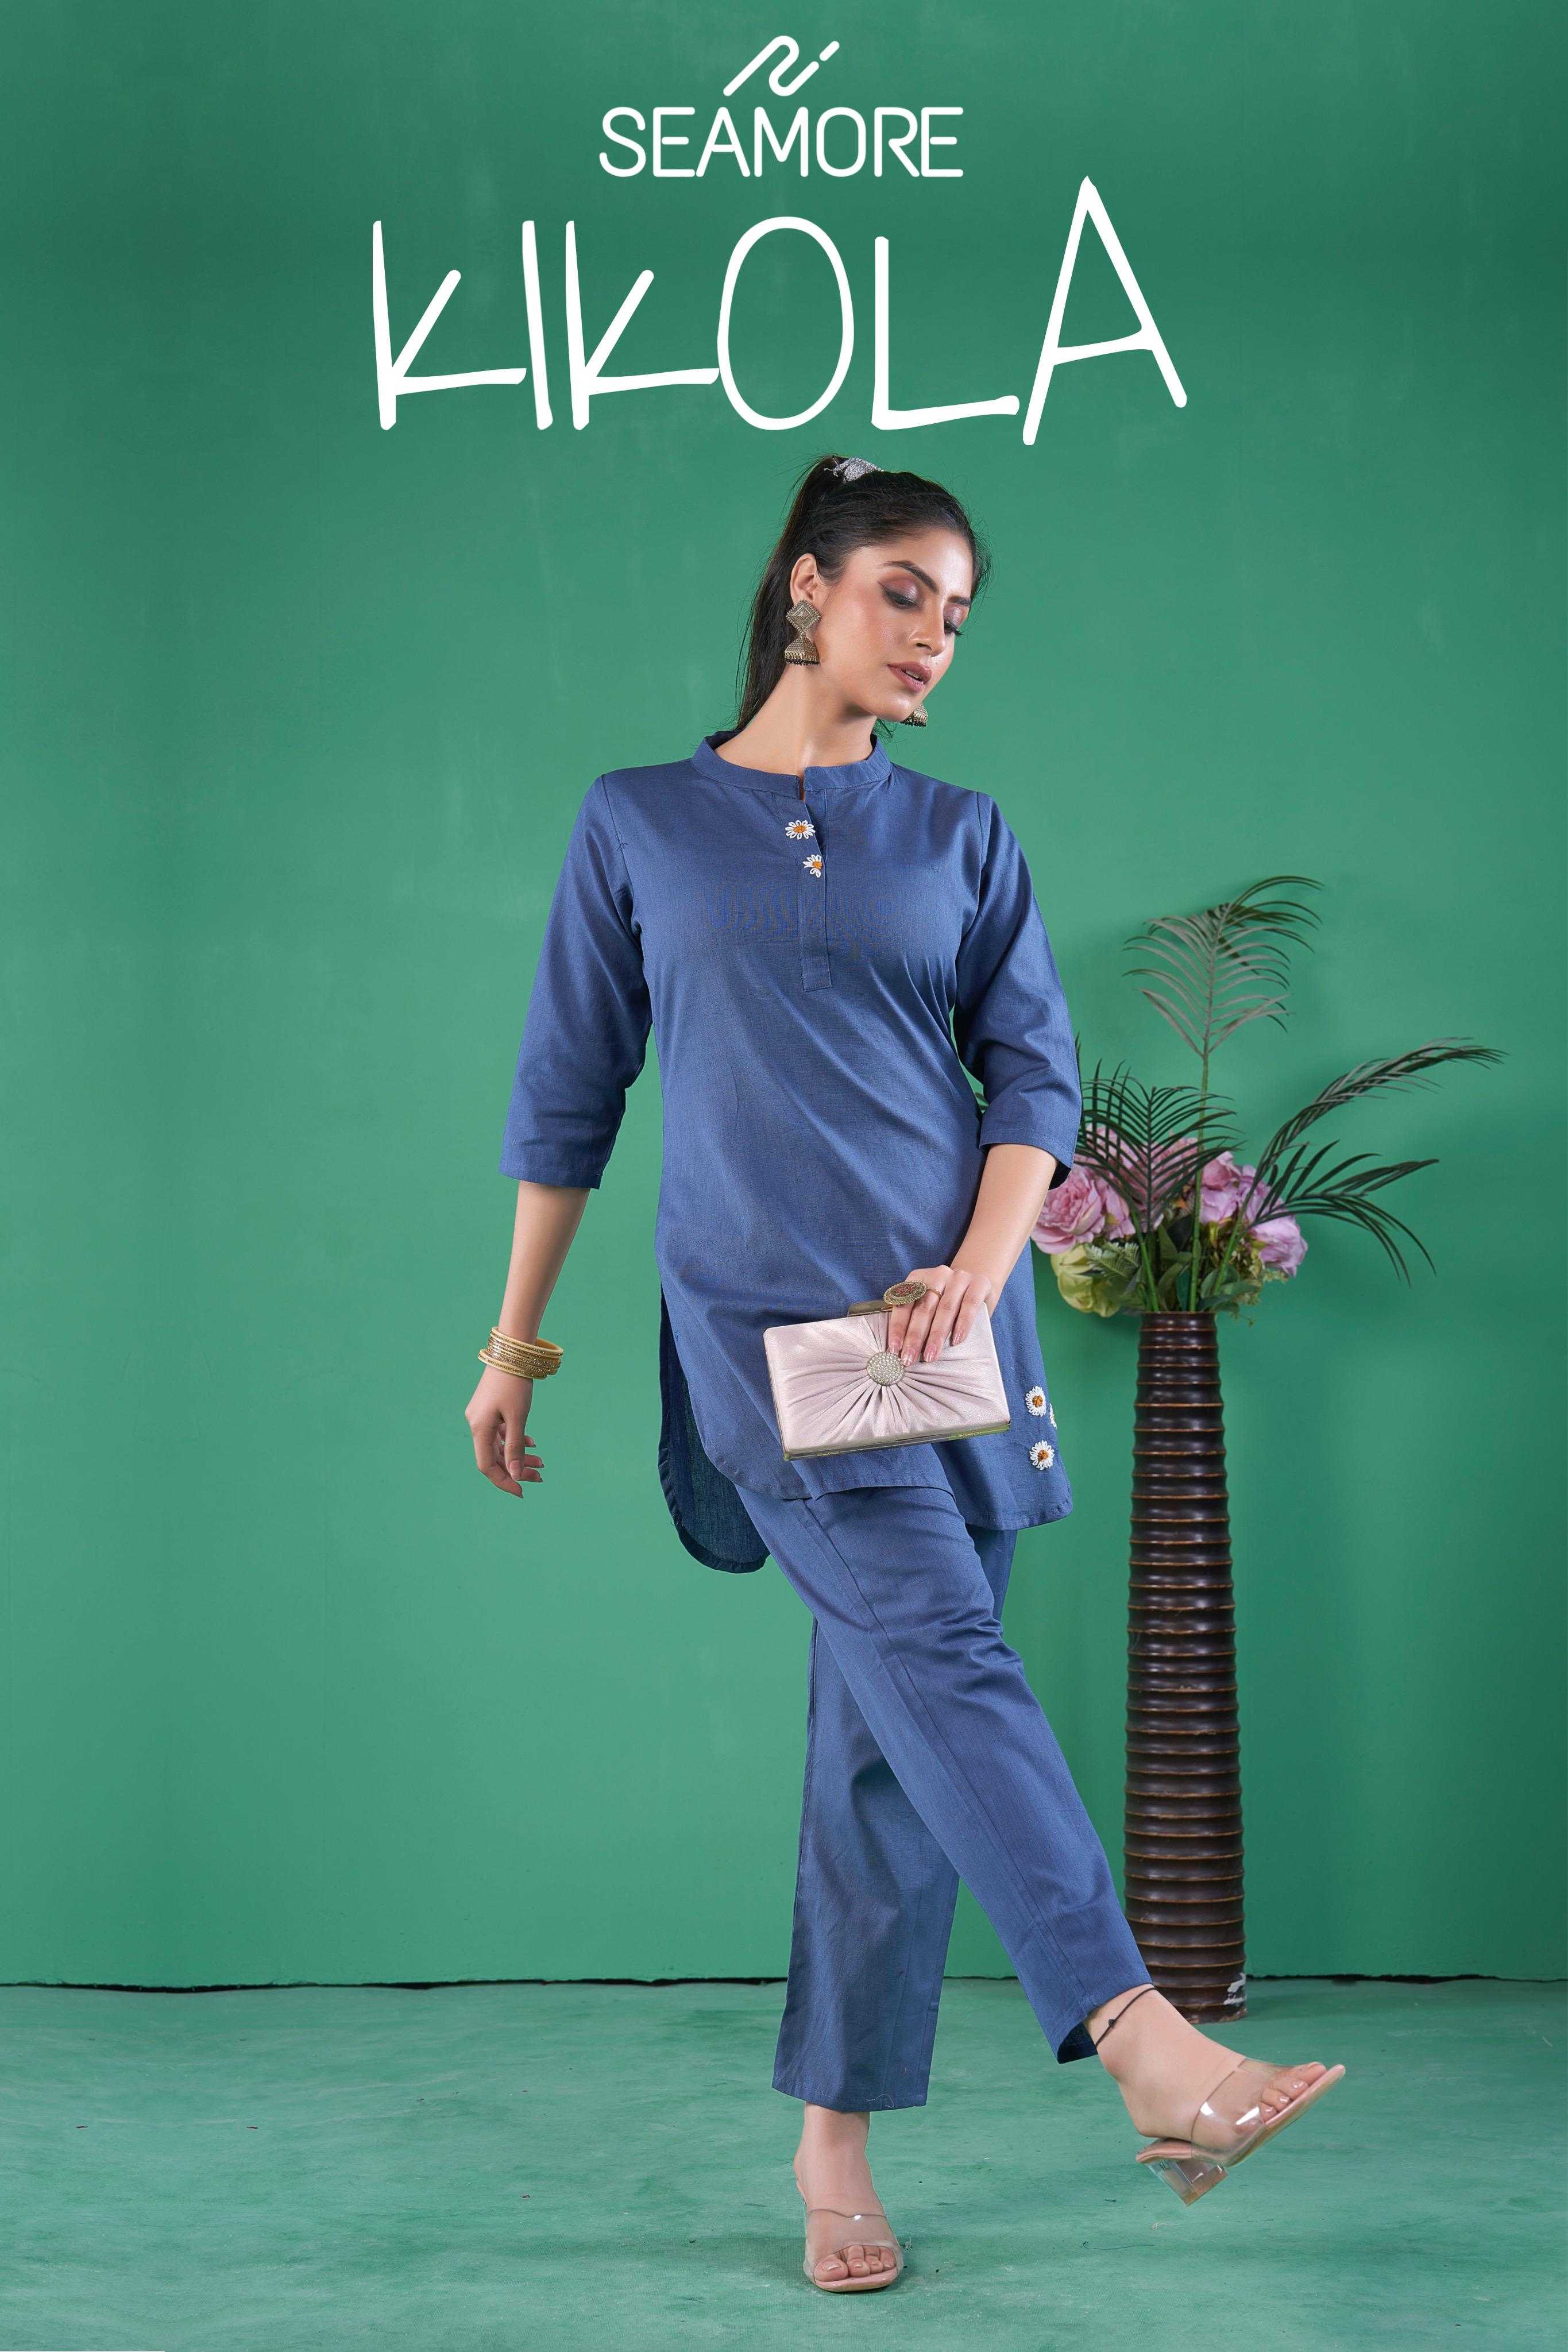 seamore presents kikola trendy outfit full stitch women kurta with pant